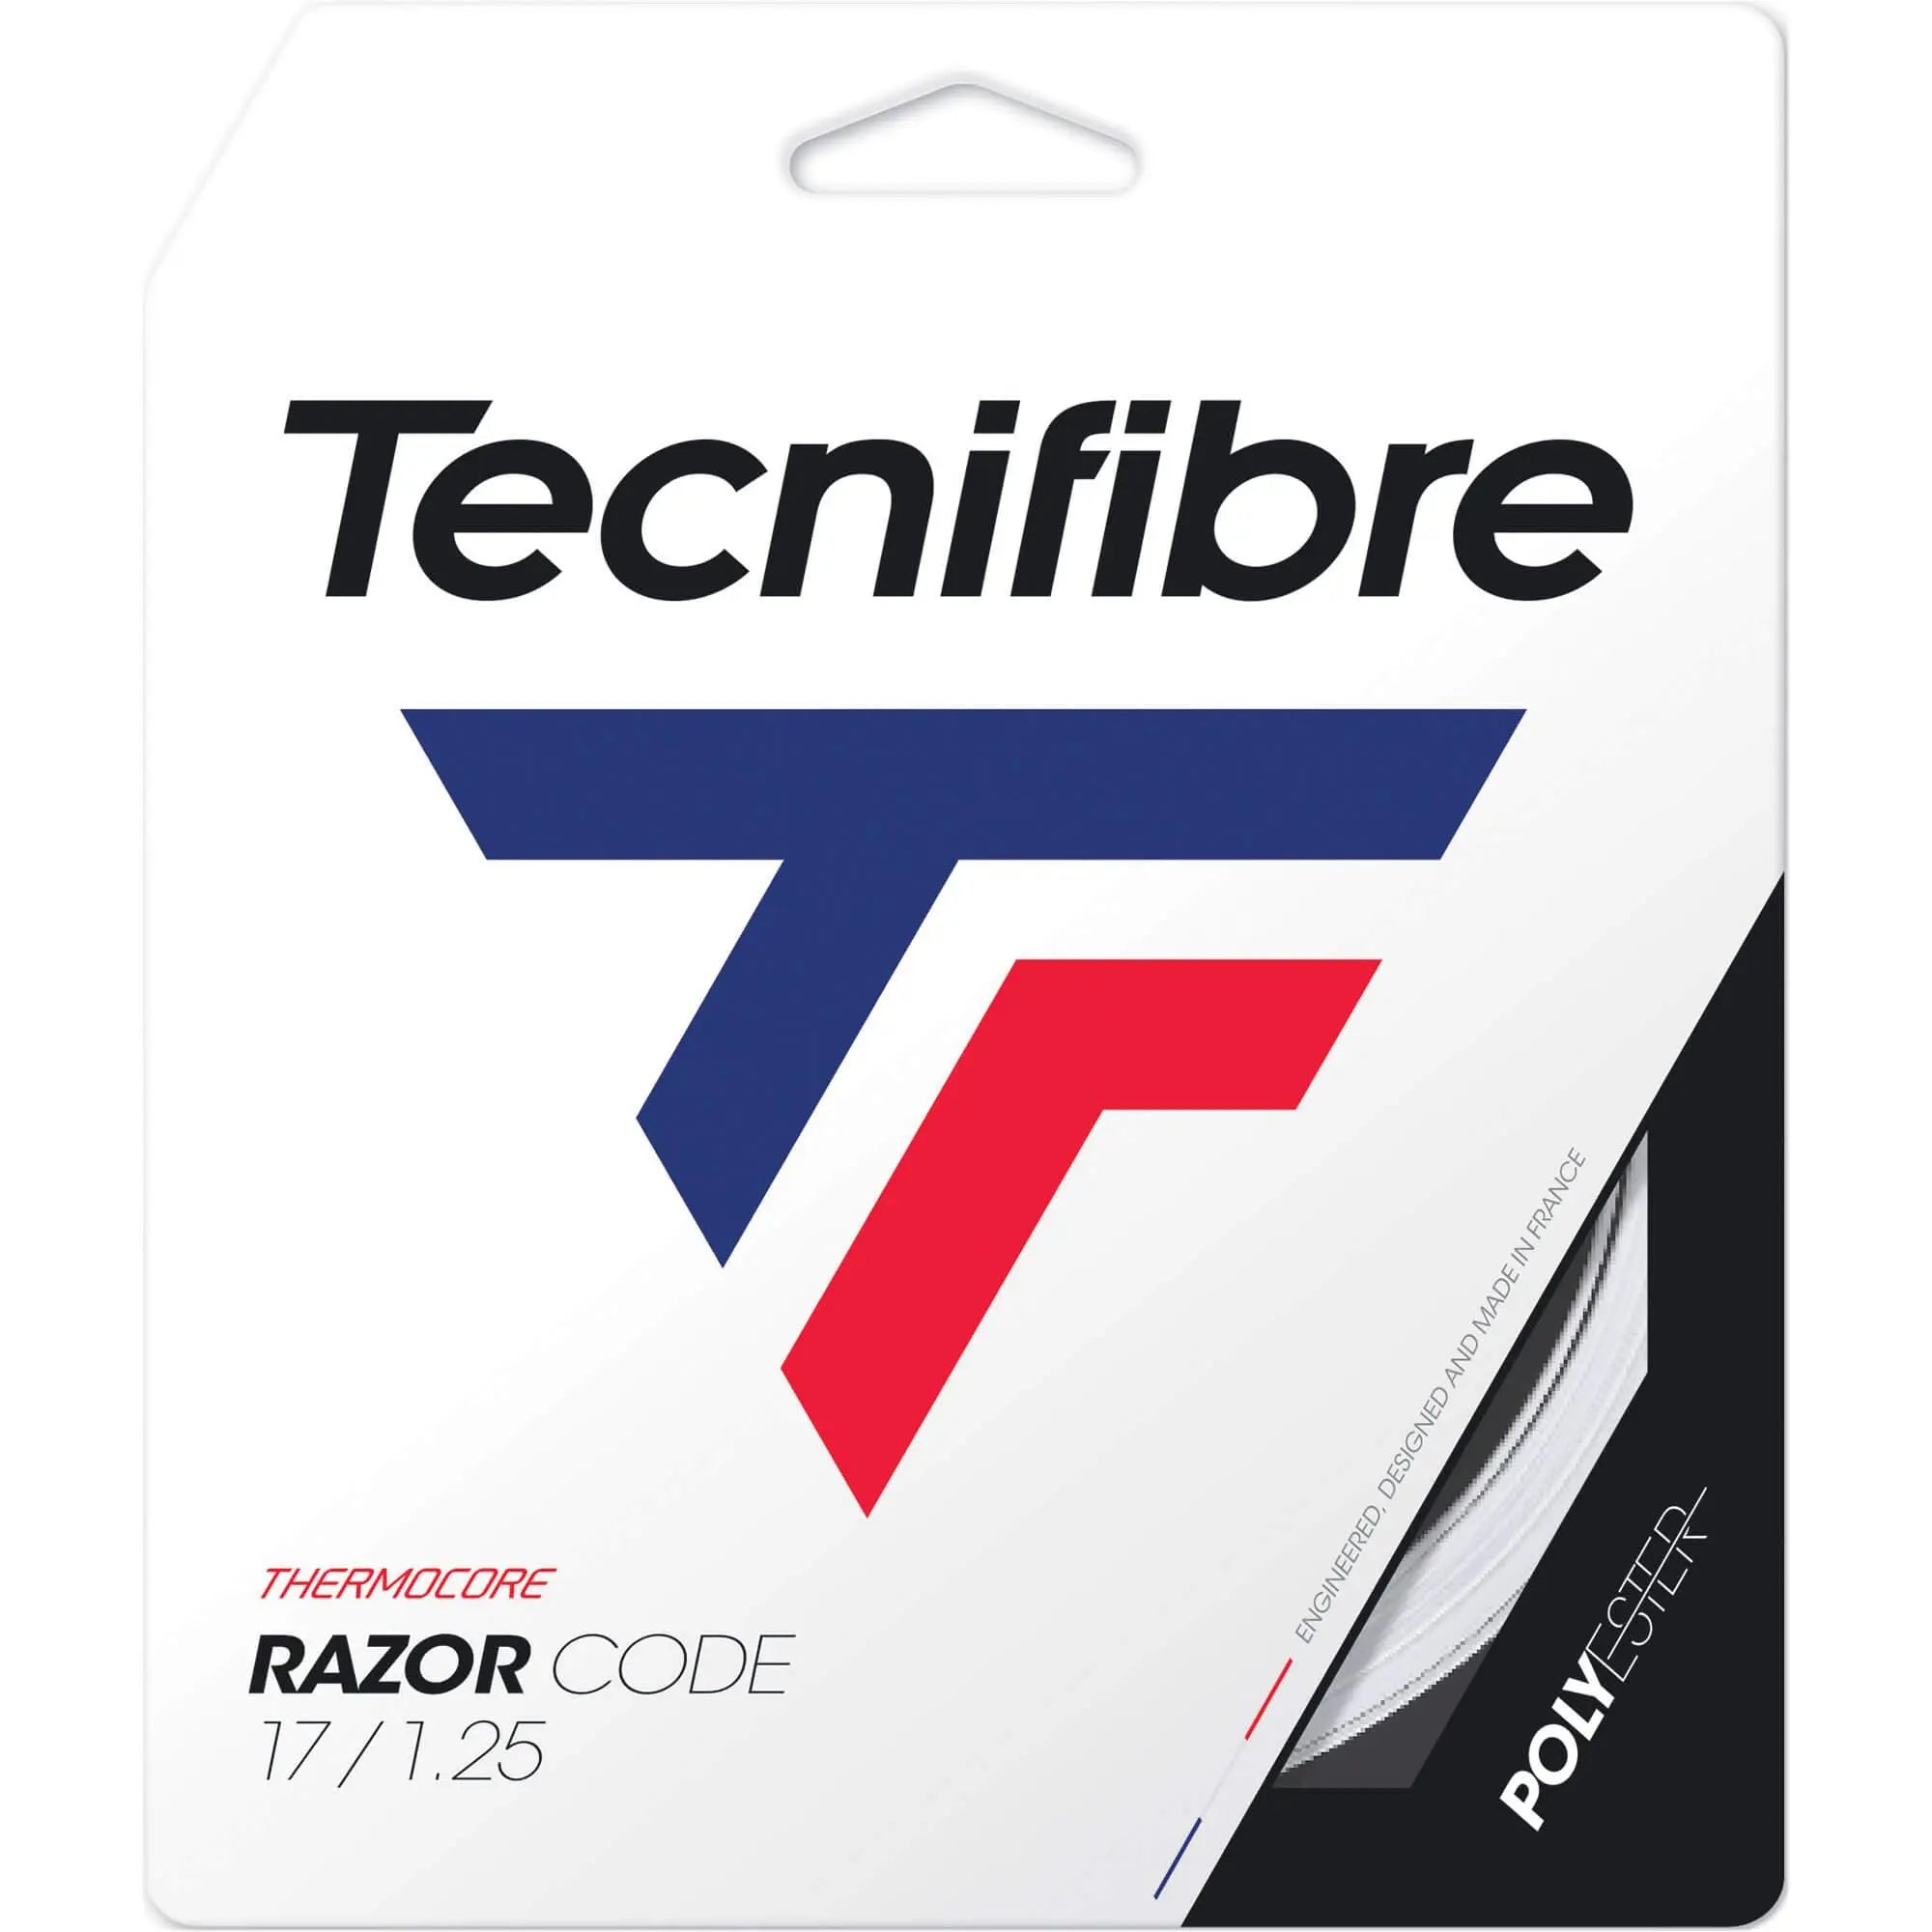 Tecnifibre Razor Code Tennis String - 1.20-The Racquet Shop-Shop Online in UAE, Saudi Arabia, Kuwait, Oman, Bahrain and Qatar